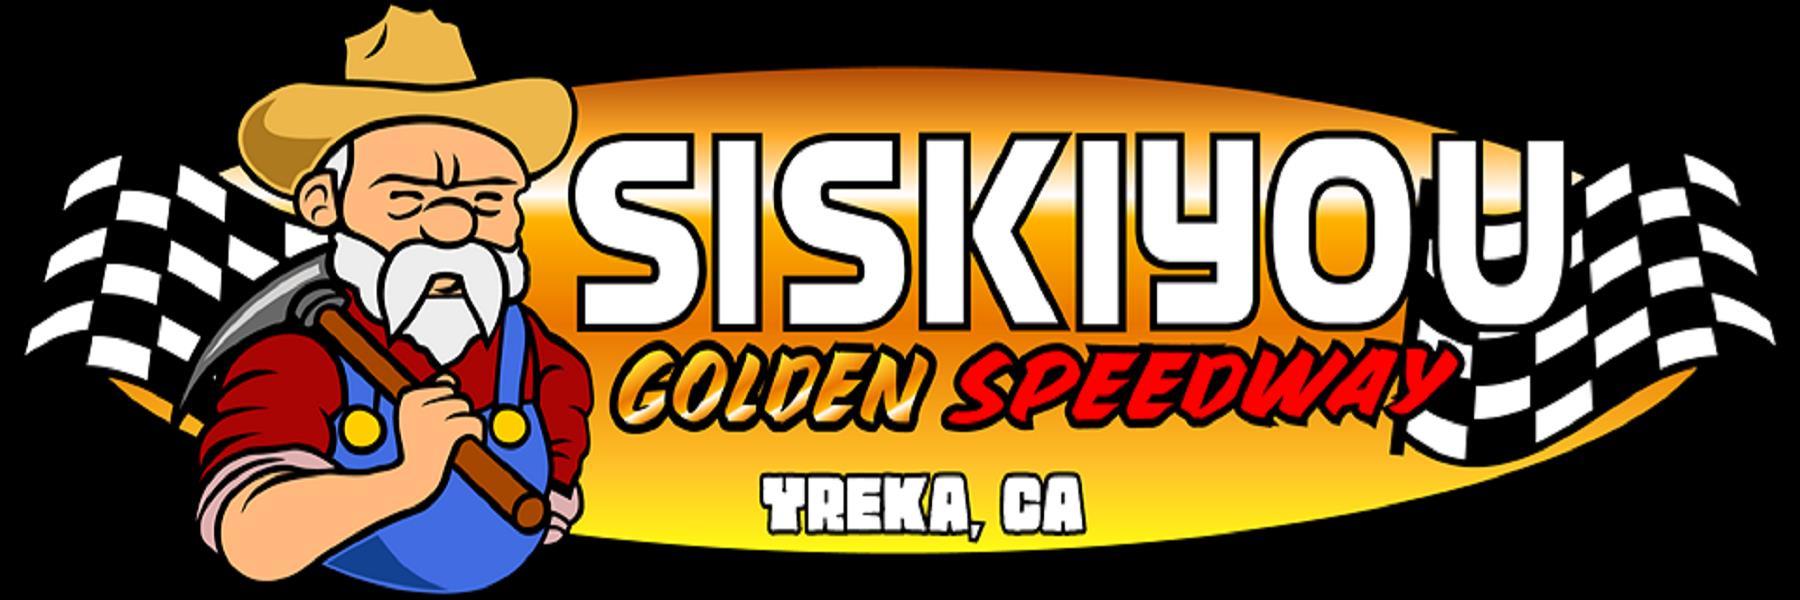 6/26/2021 - Siskiyou Golden Speedway